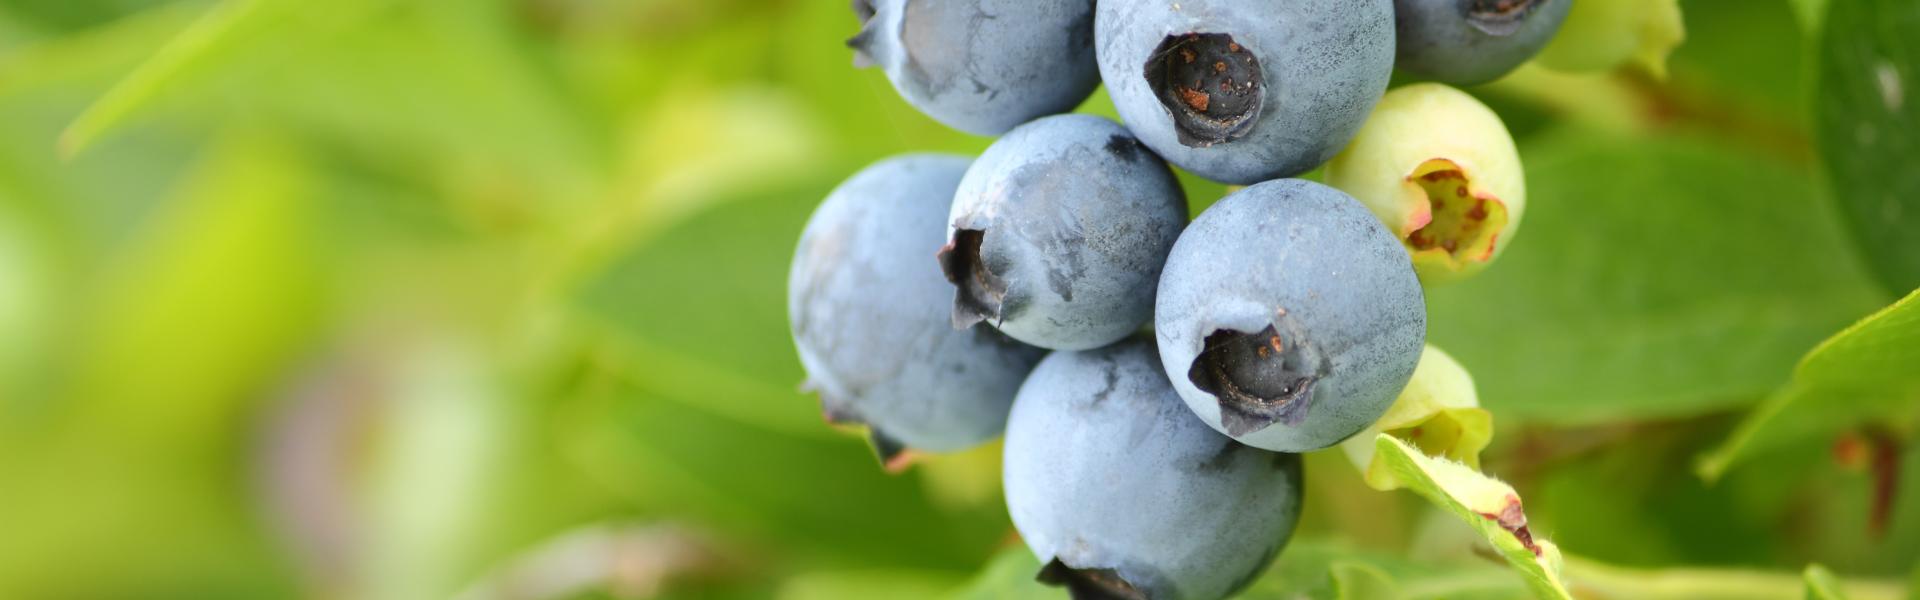 blueberries on a vine